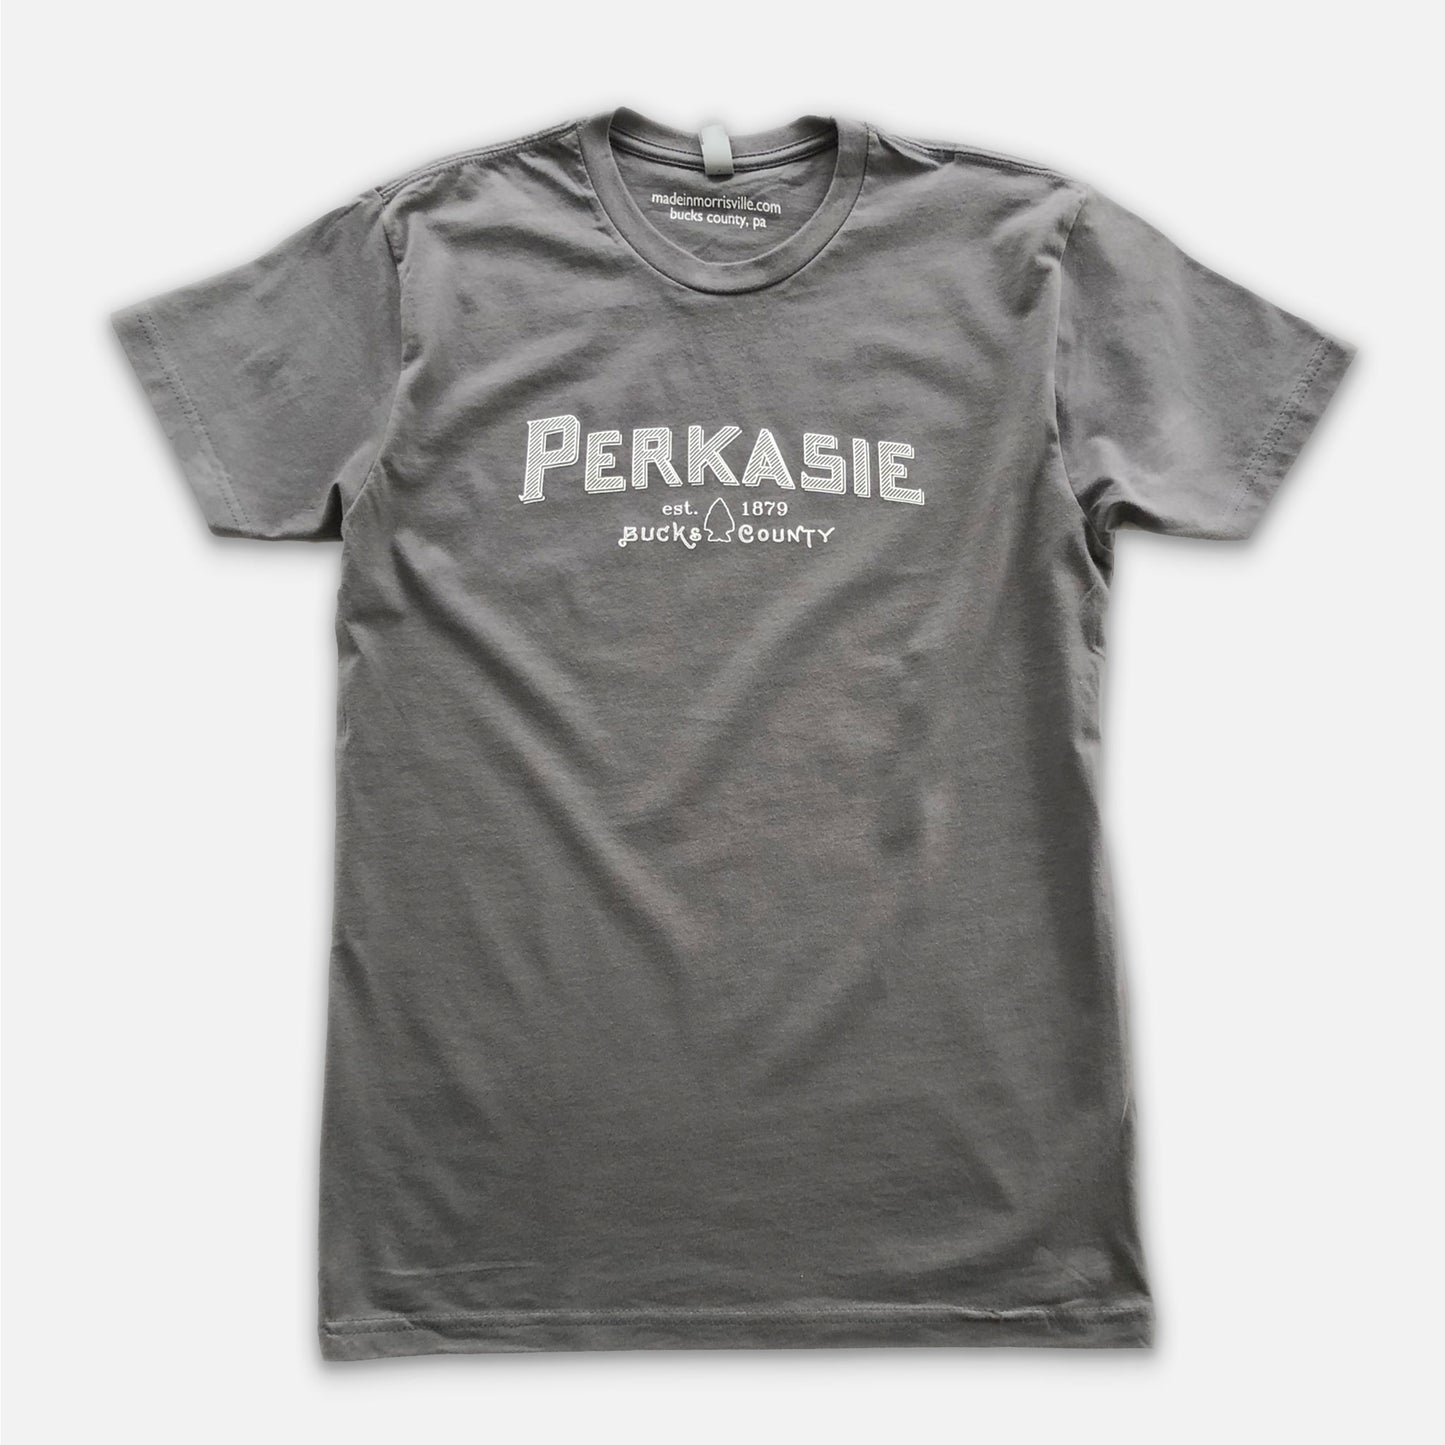 Perkasie/Lenape spearhead graphic t-shirt